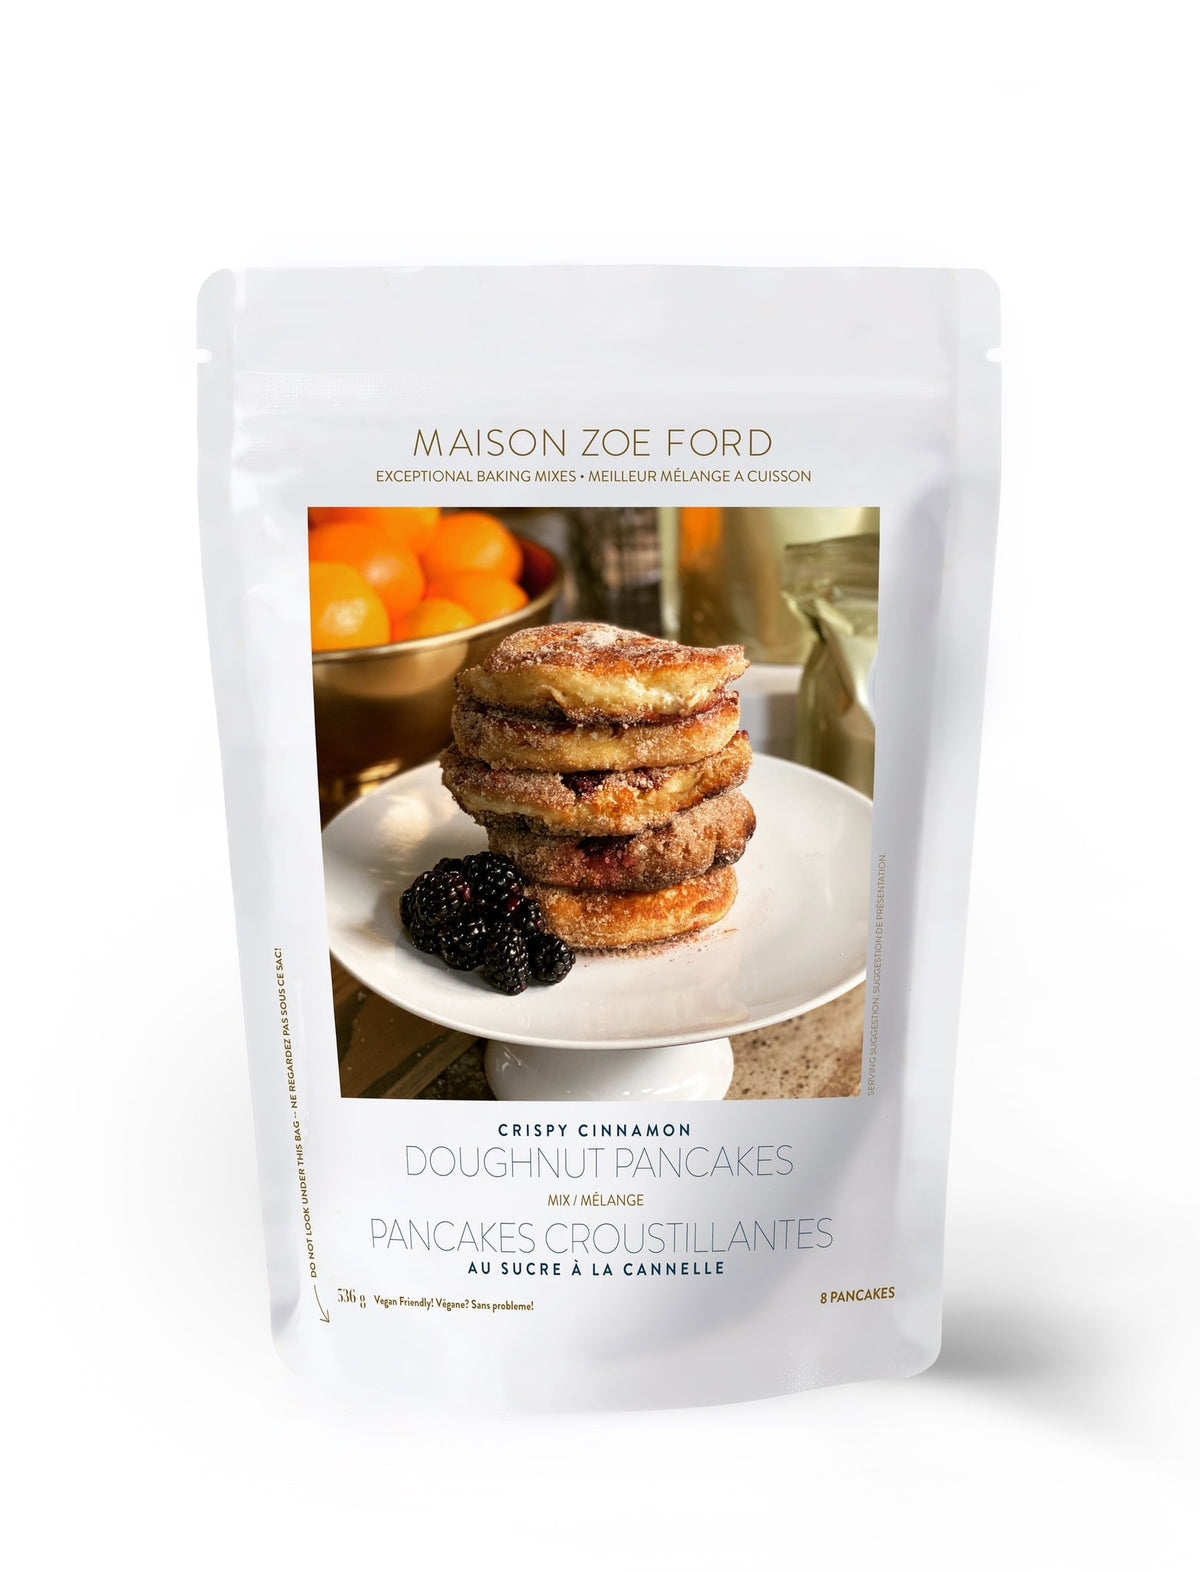 Zoe Ford The Very Best Crispy Pancake Mix! With Cinnamon Sugar